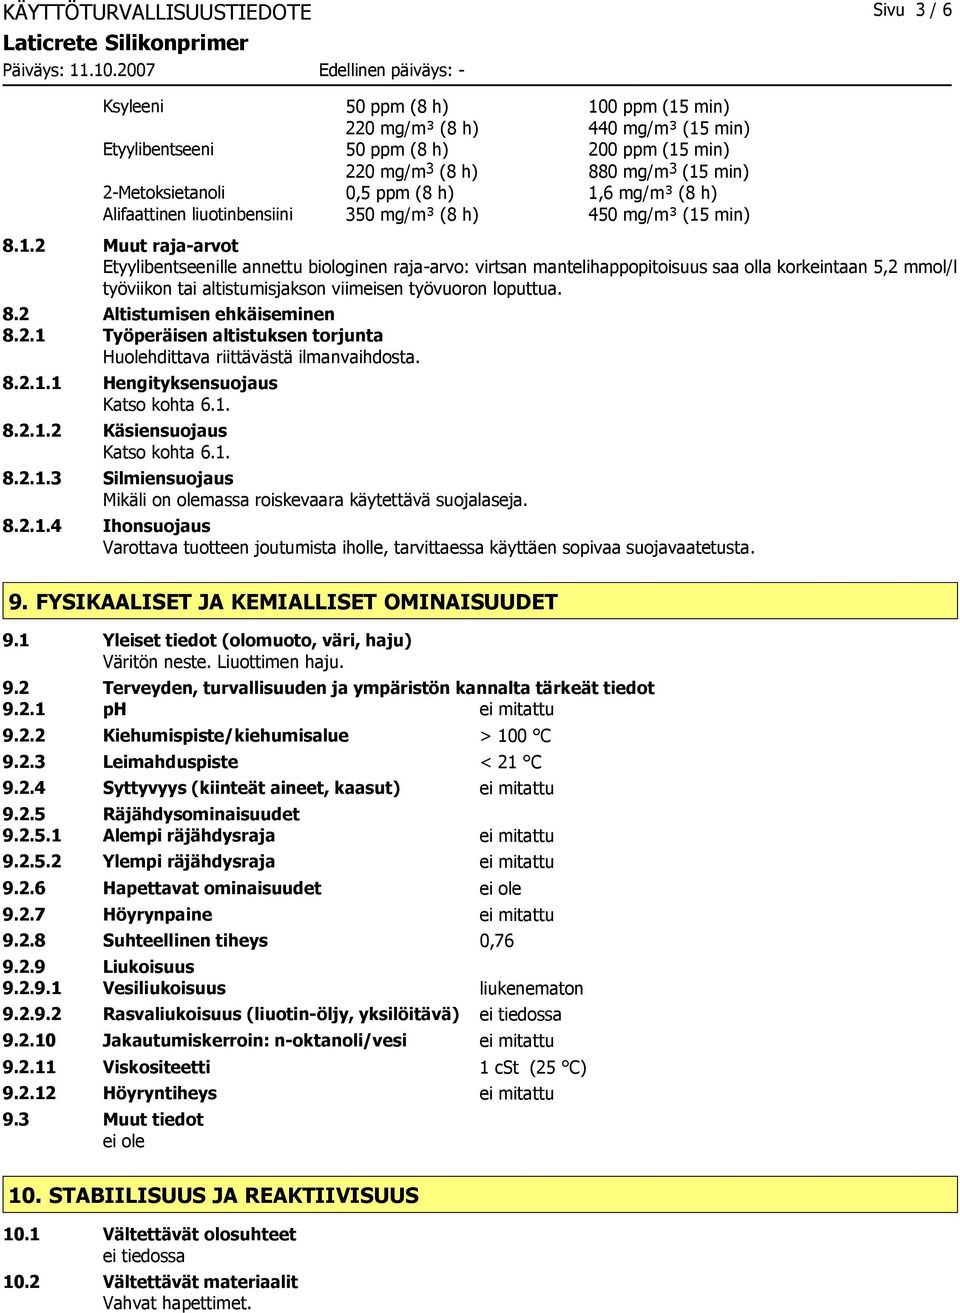 6 mg/m³ (8 h) Alifaattinen liuotinbensiini 350 mg/m³ (8 h) 450 mg/m³ (15